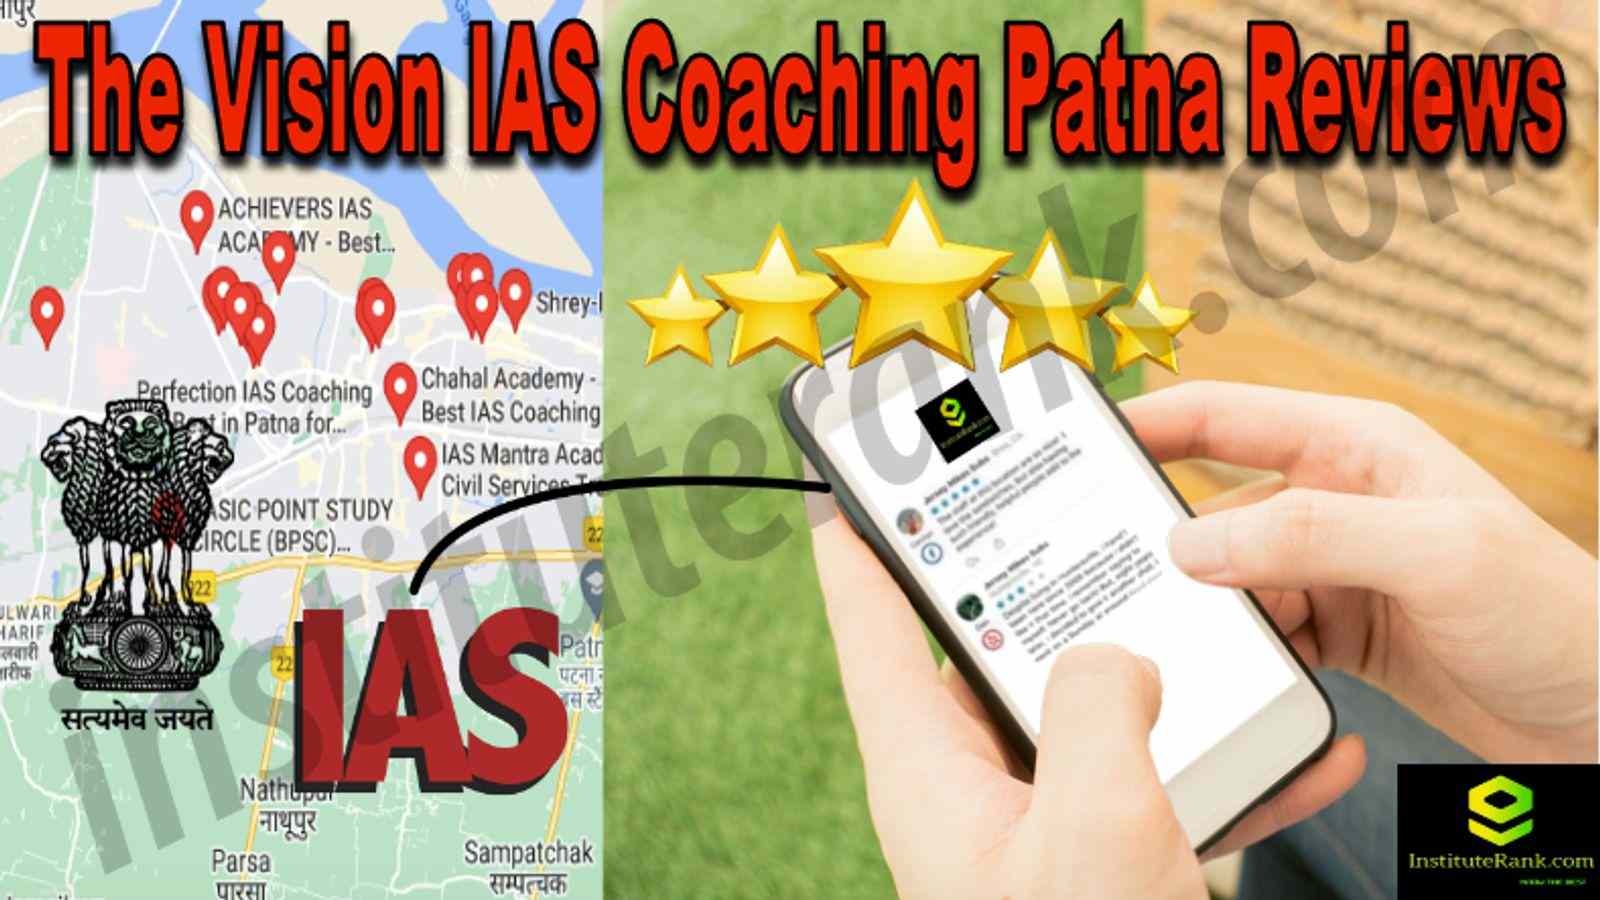 The Vision IAS Coaching Patna Reviews